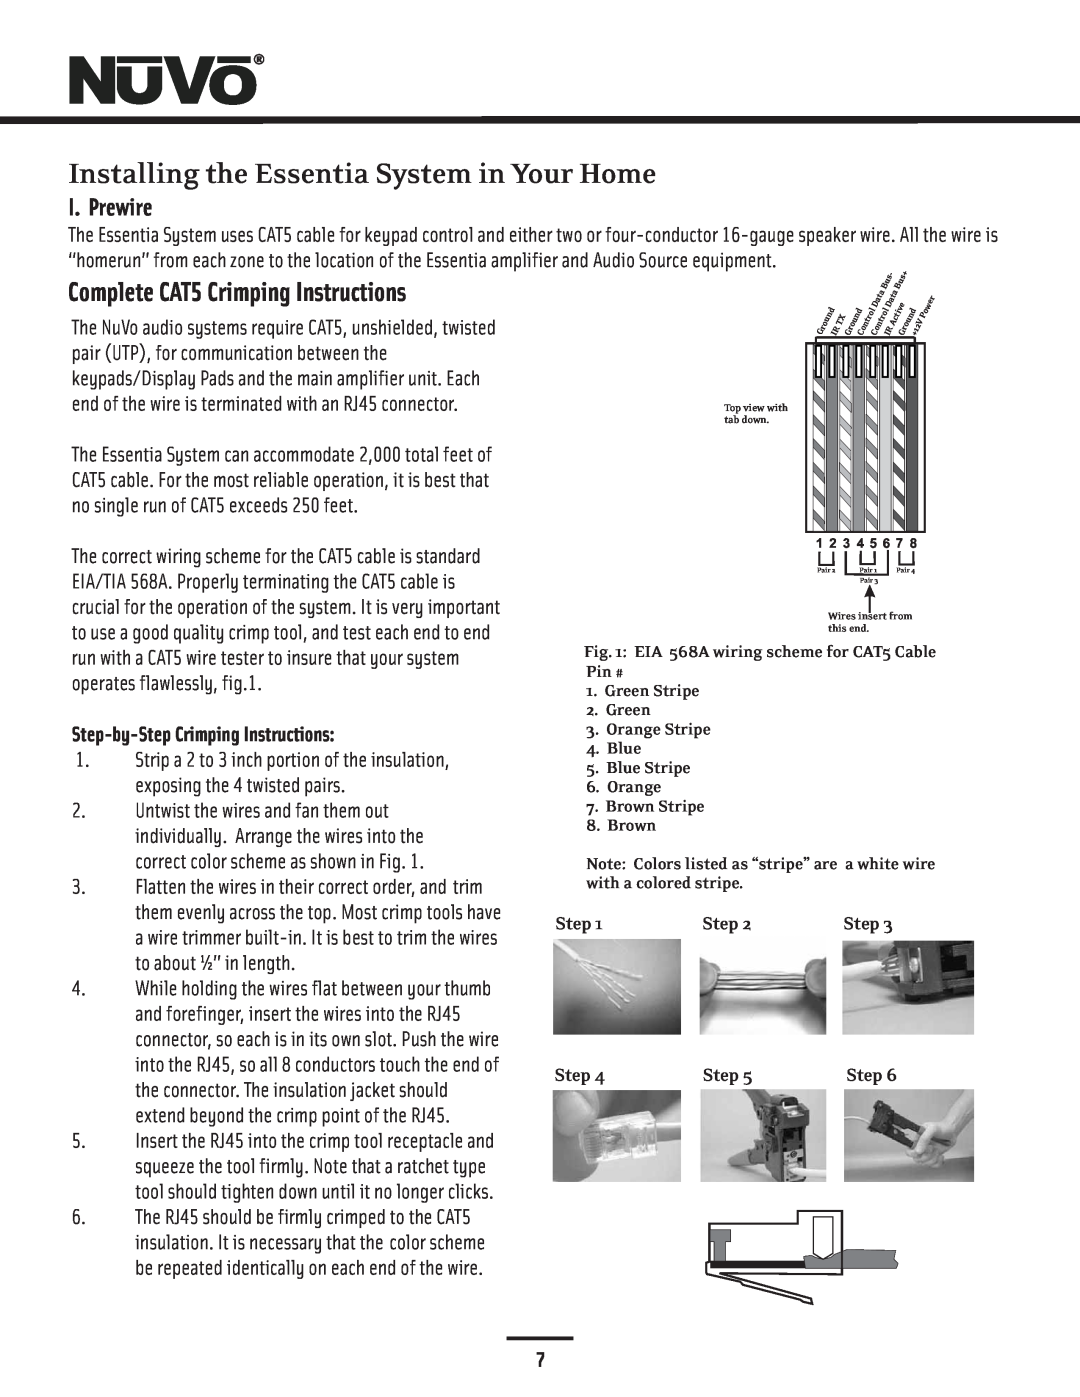 Nuvo NV-E6DMS-DC, NV-E6DXS-DC Installing the Essentia System in Your Home, I. Prewire, Step-by-StepCrimping Instructions 